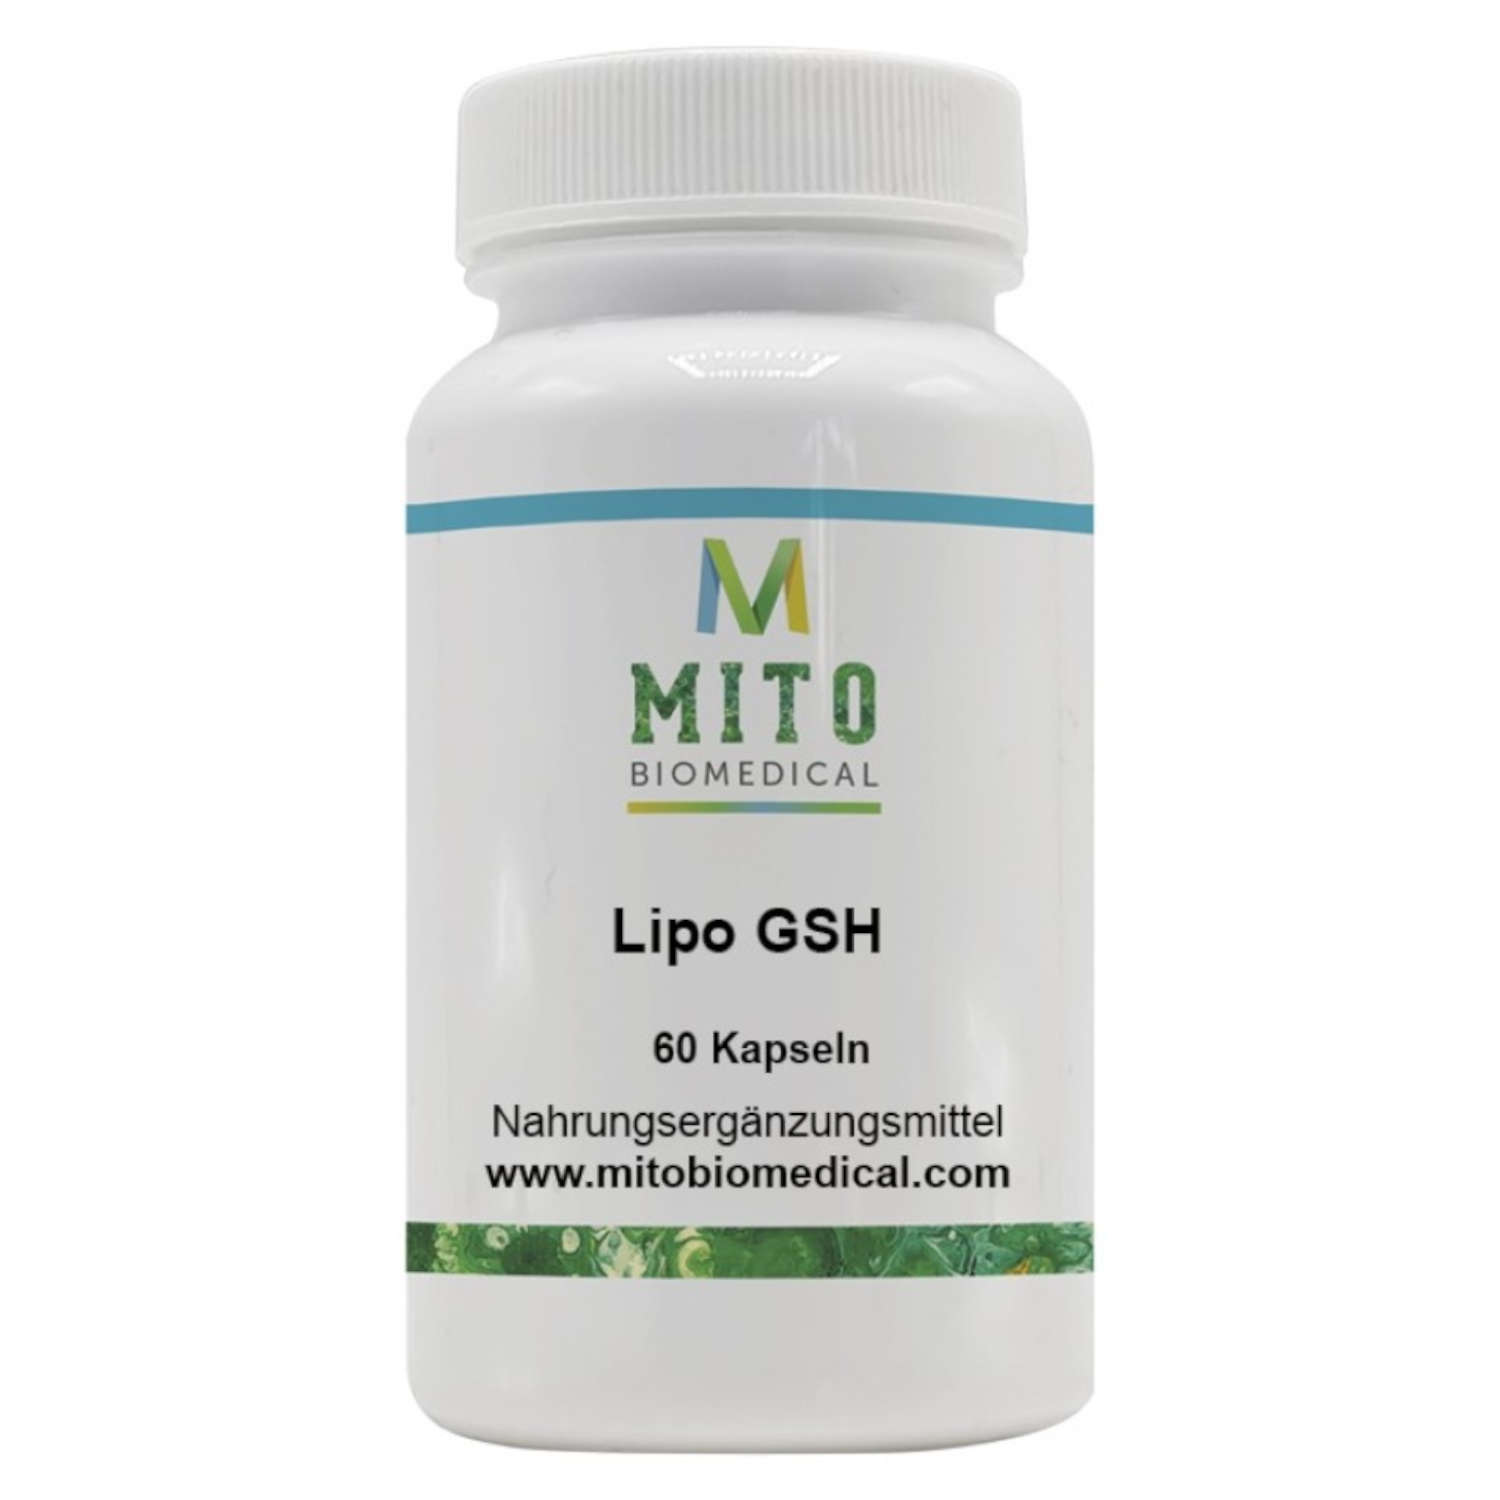 MITOlipo GSH von Mitobiomedical - 100ml